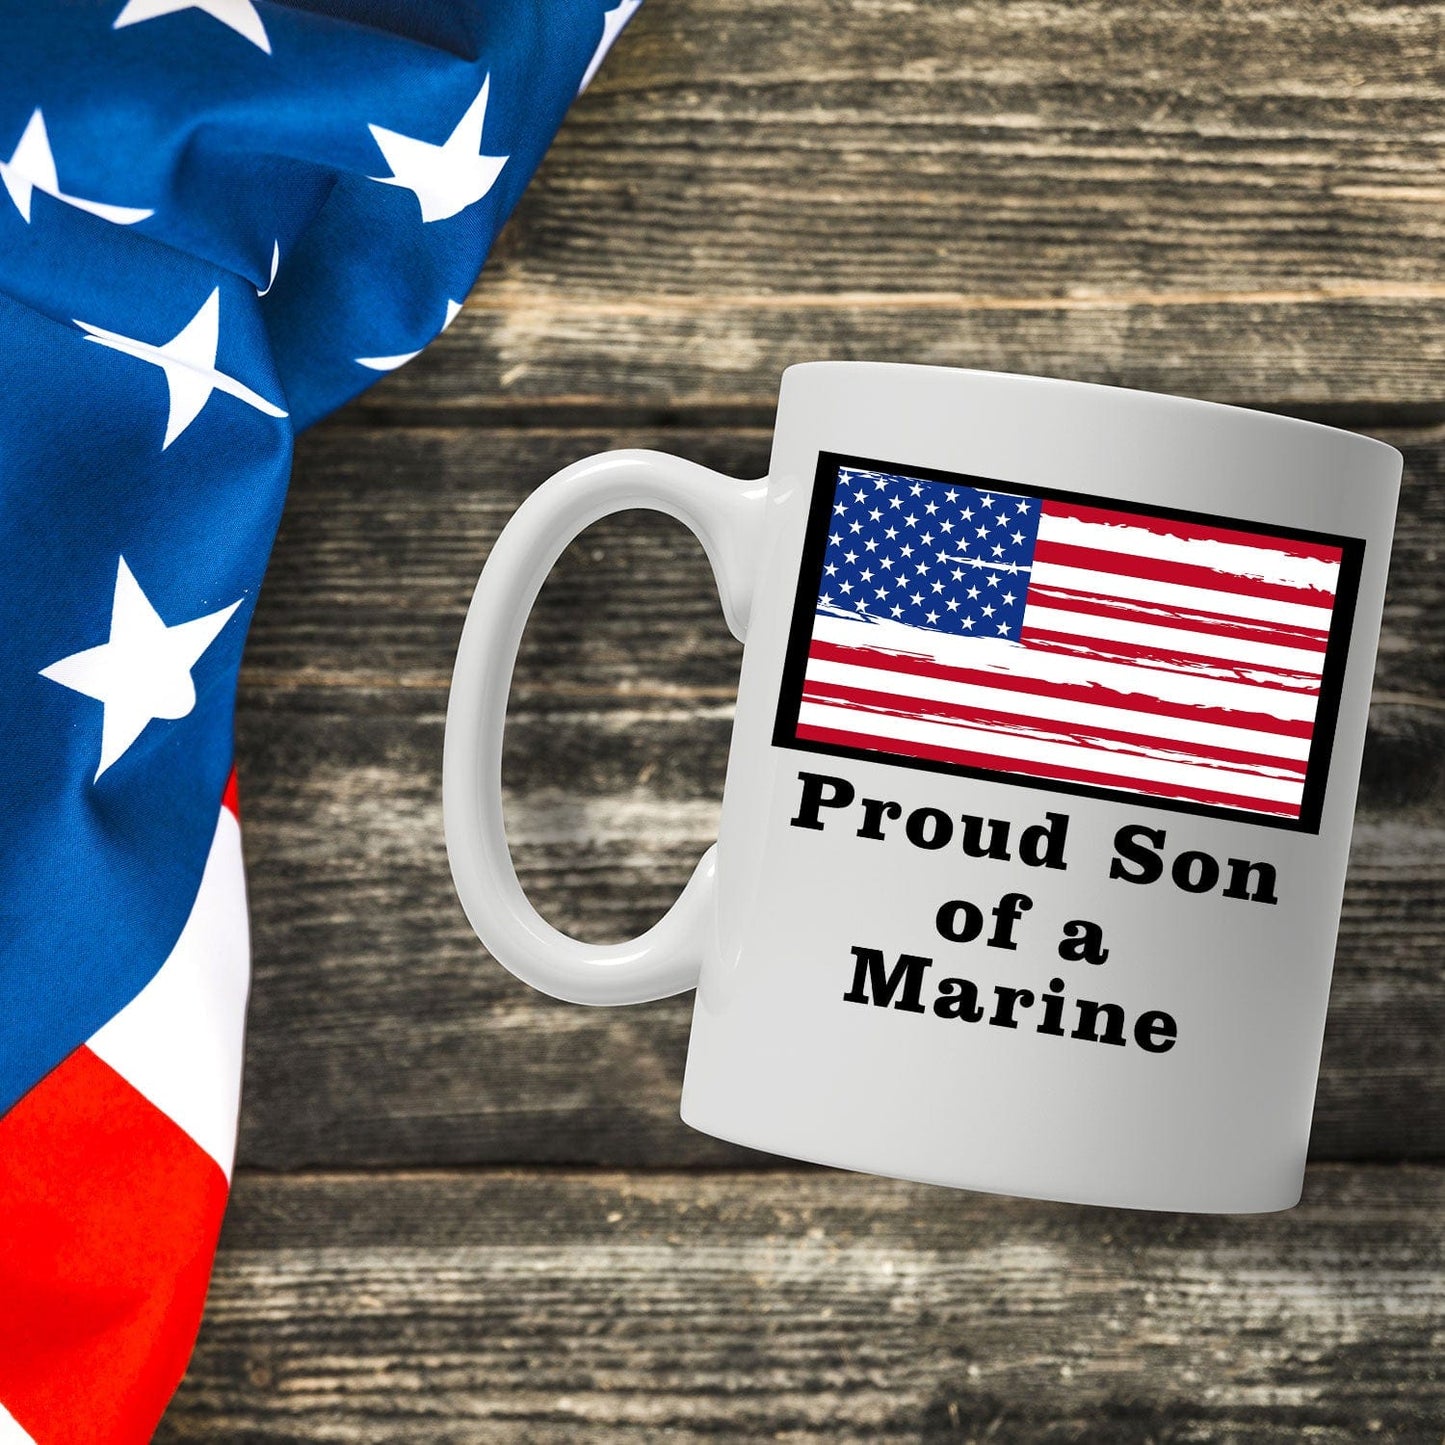 Proud Son of a Veteran Coffee Mug